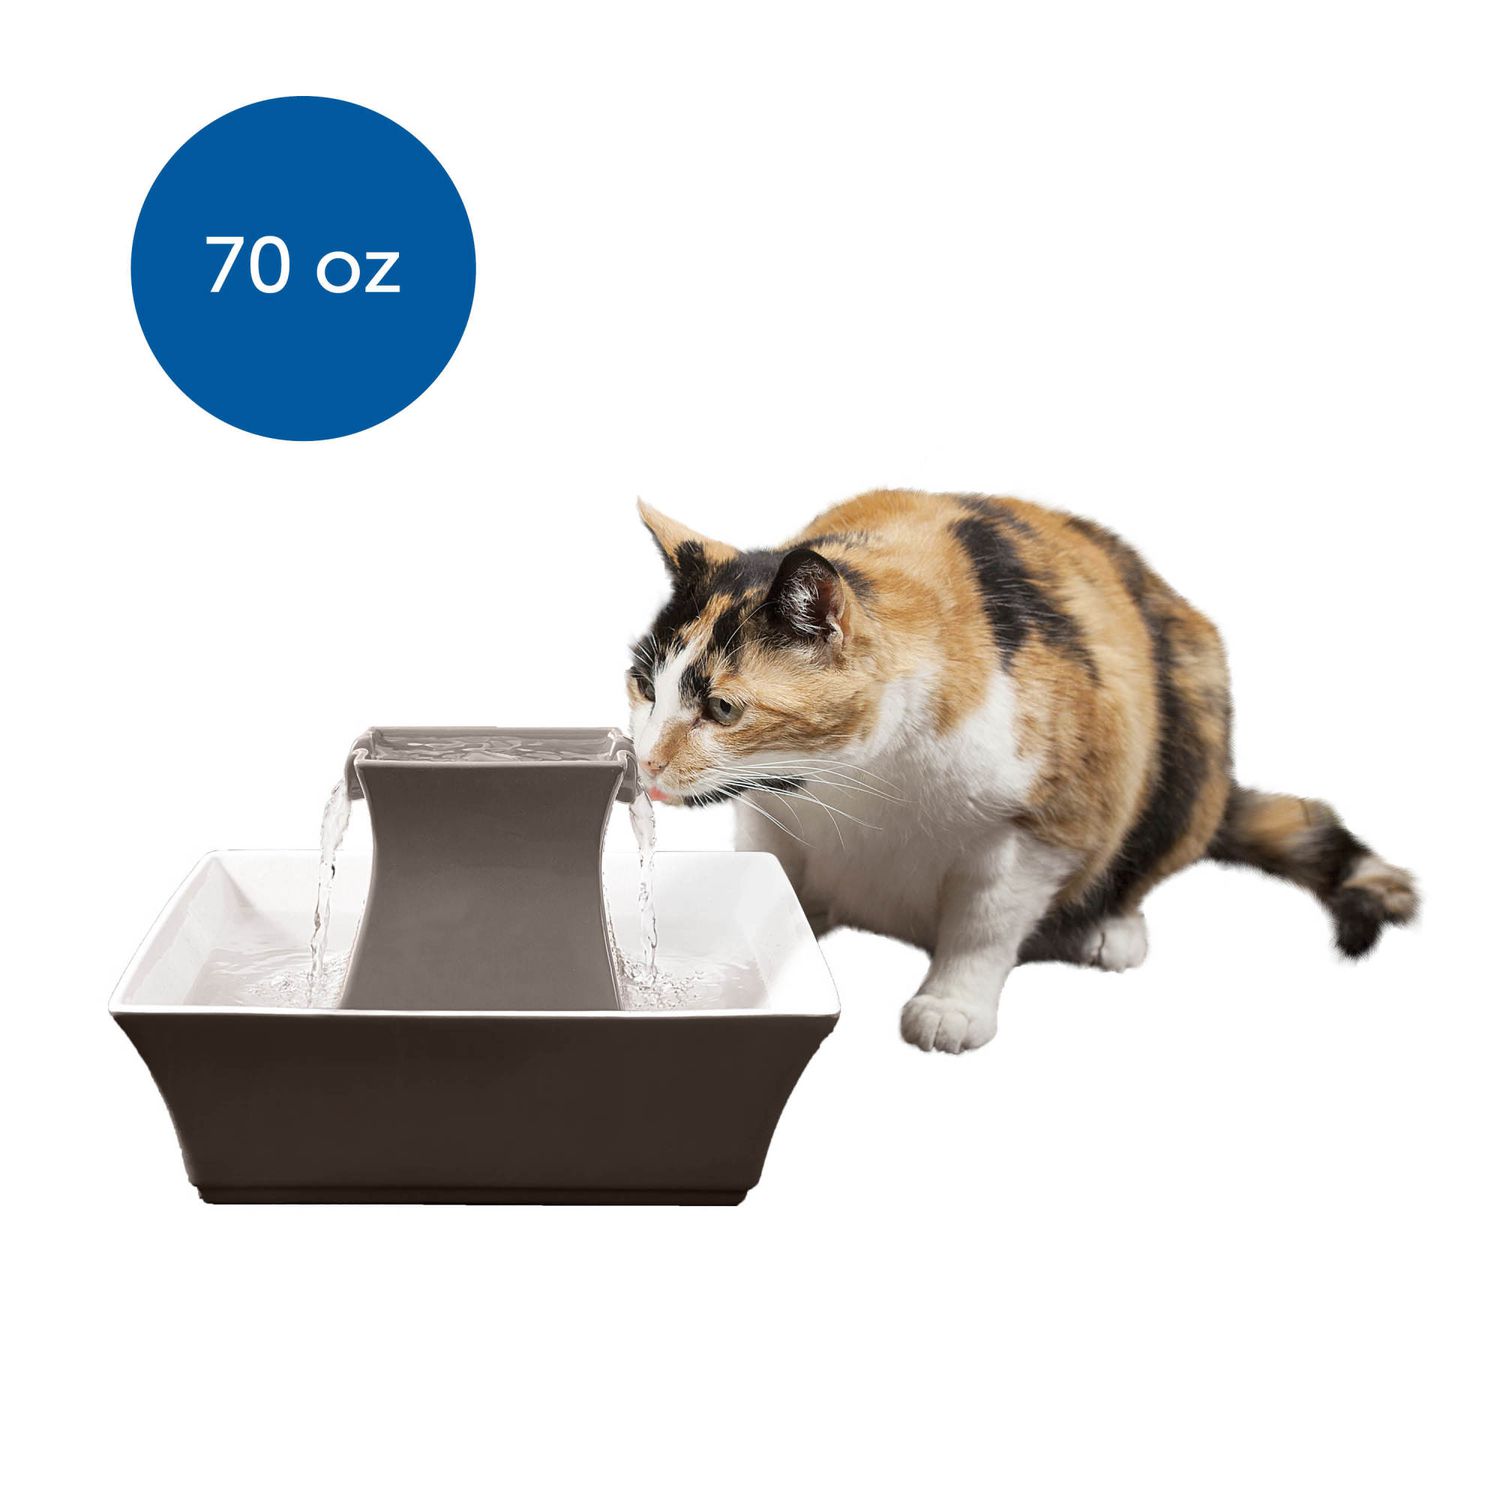 Petsafe drinkwell cat water fountain